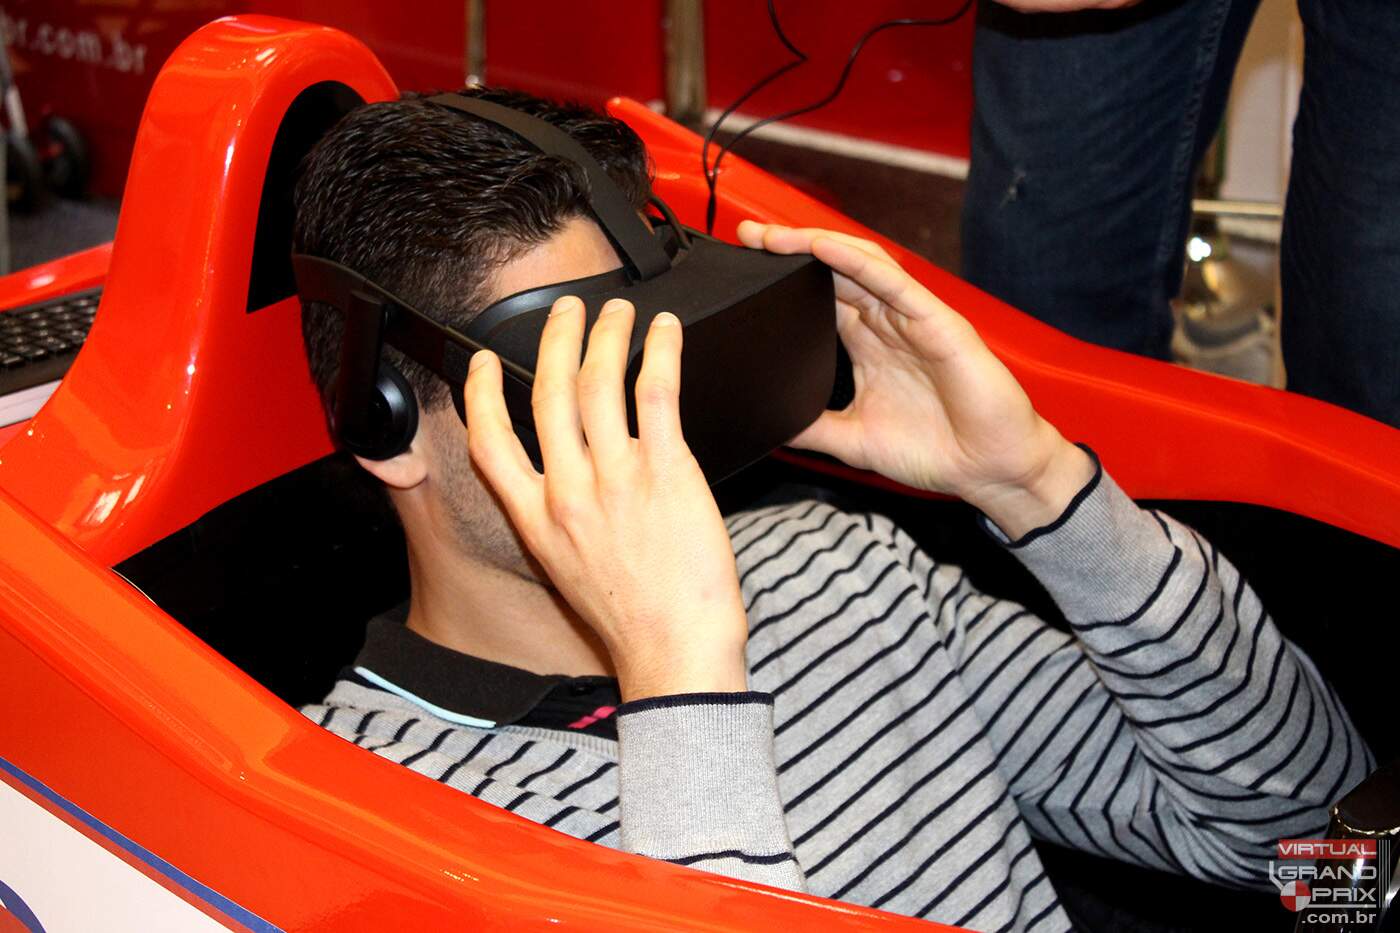 Simuladores F1 “VR” TOTAL @ Morumbi Shopping